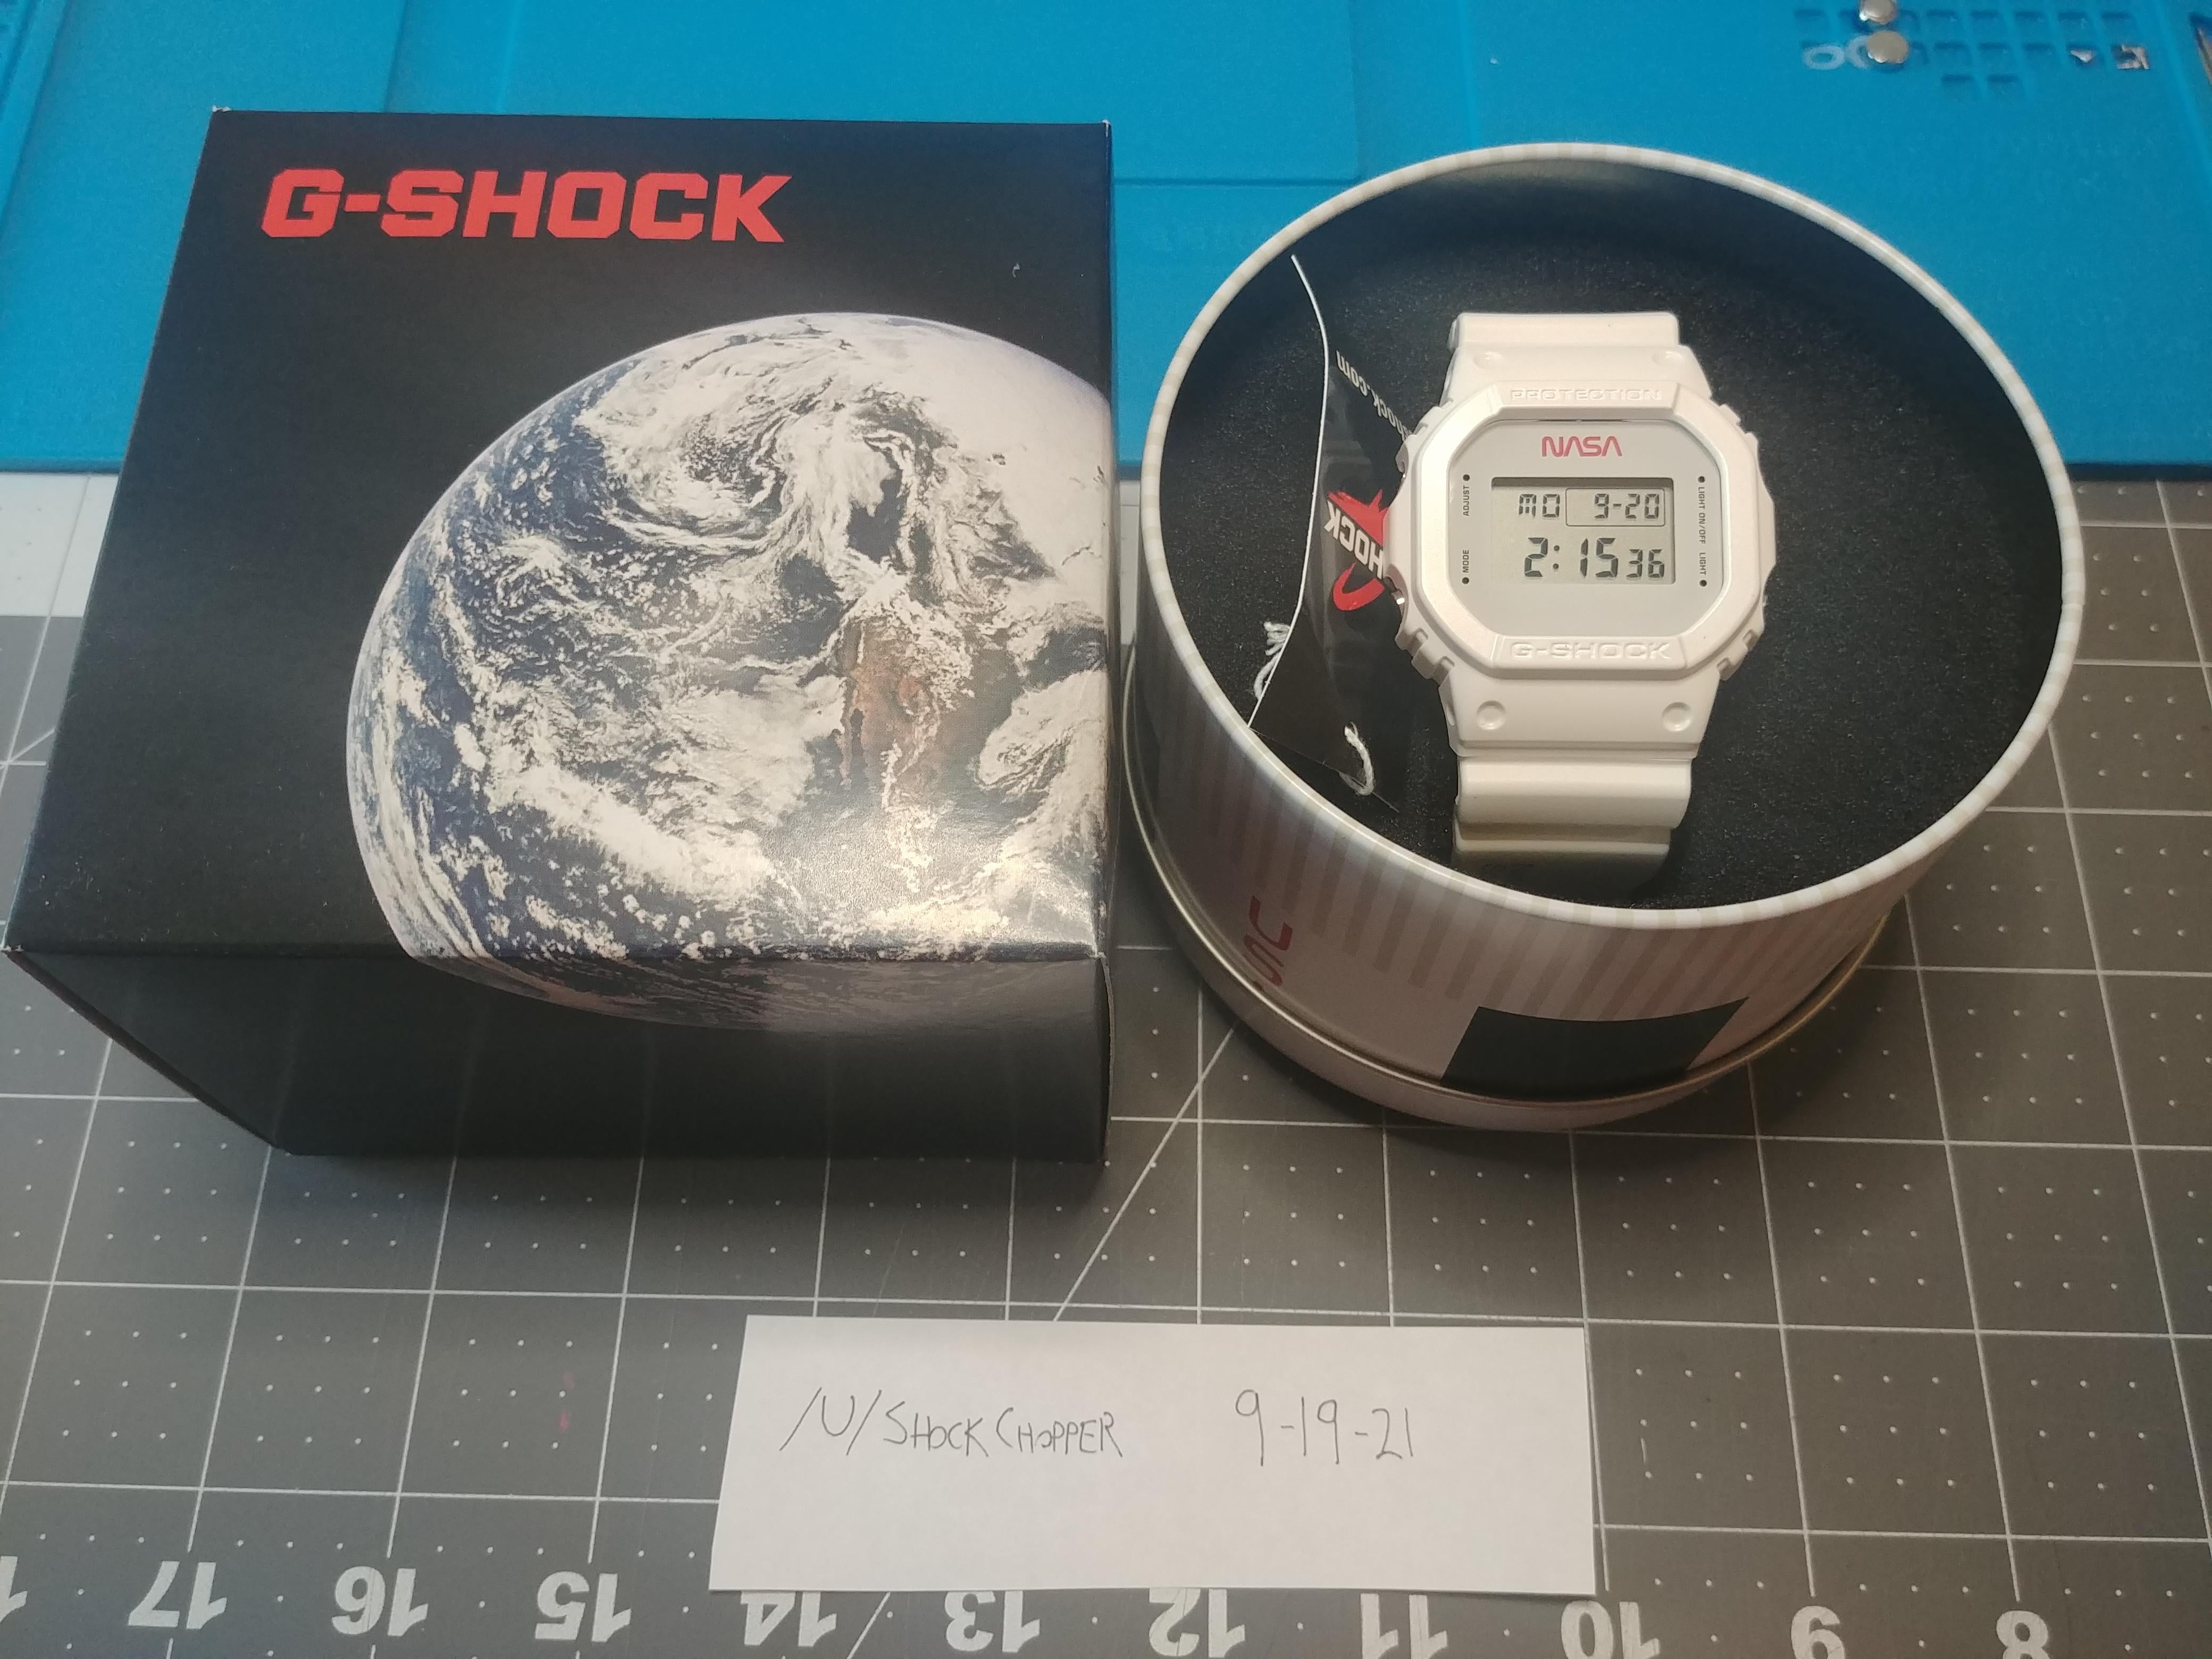 WTS] NASA G-Shock Ltd Edition DW5600NASA20 - BNIB | WatchCharts